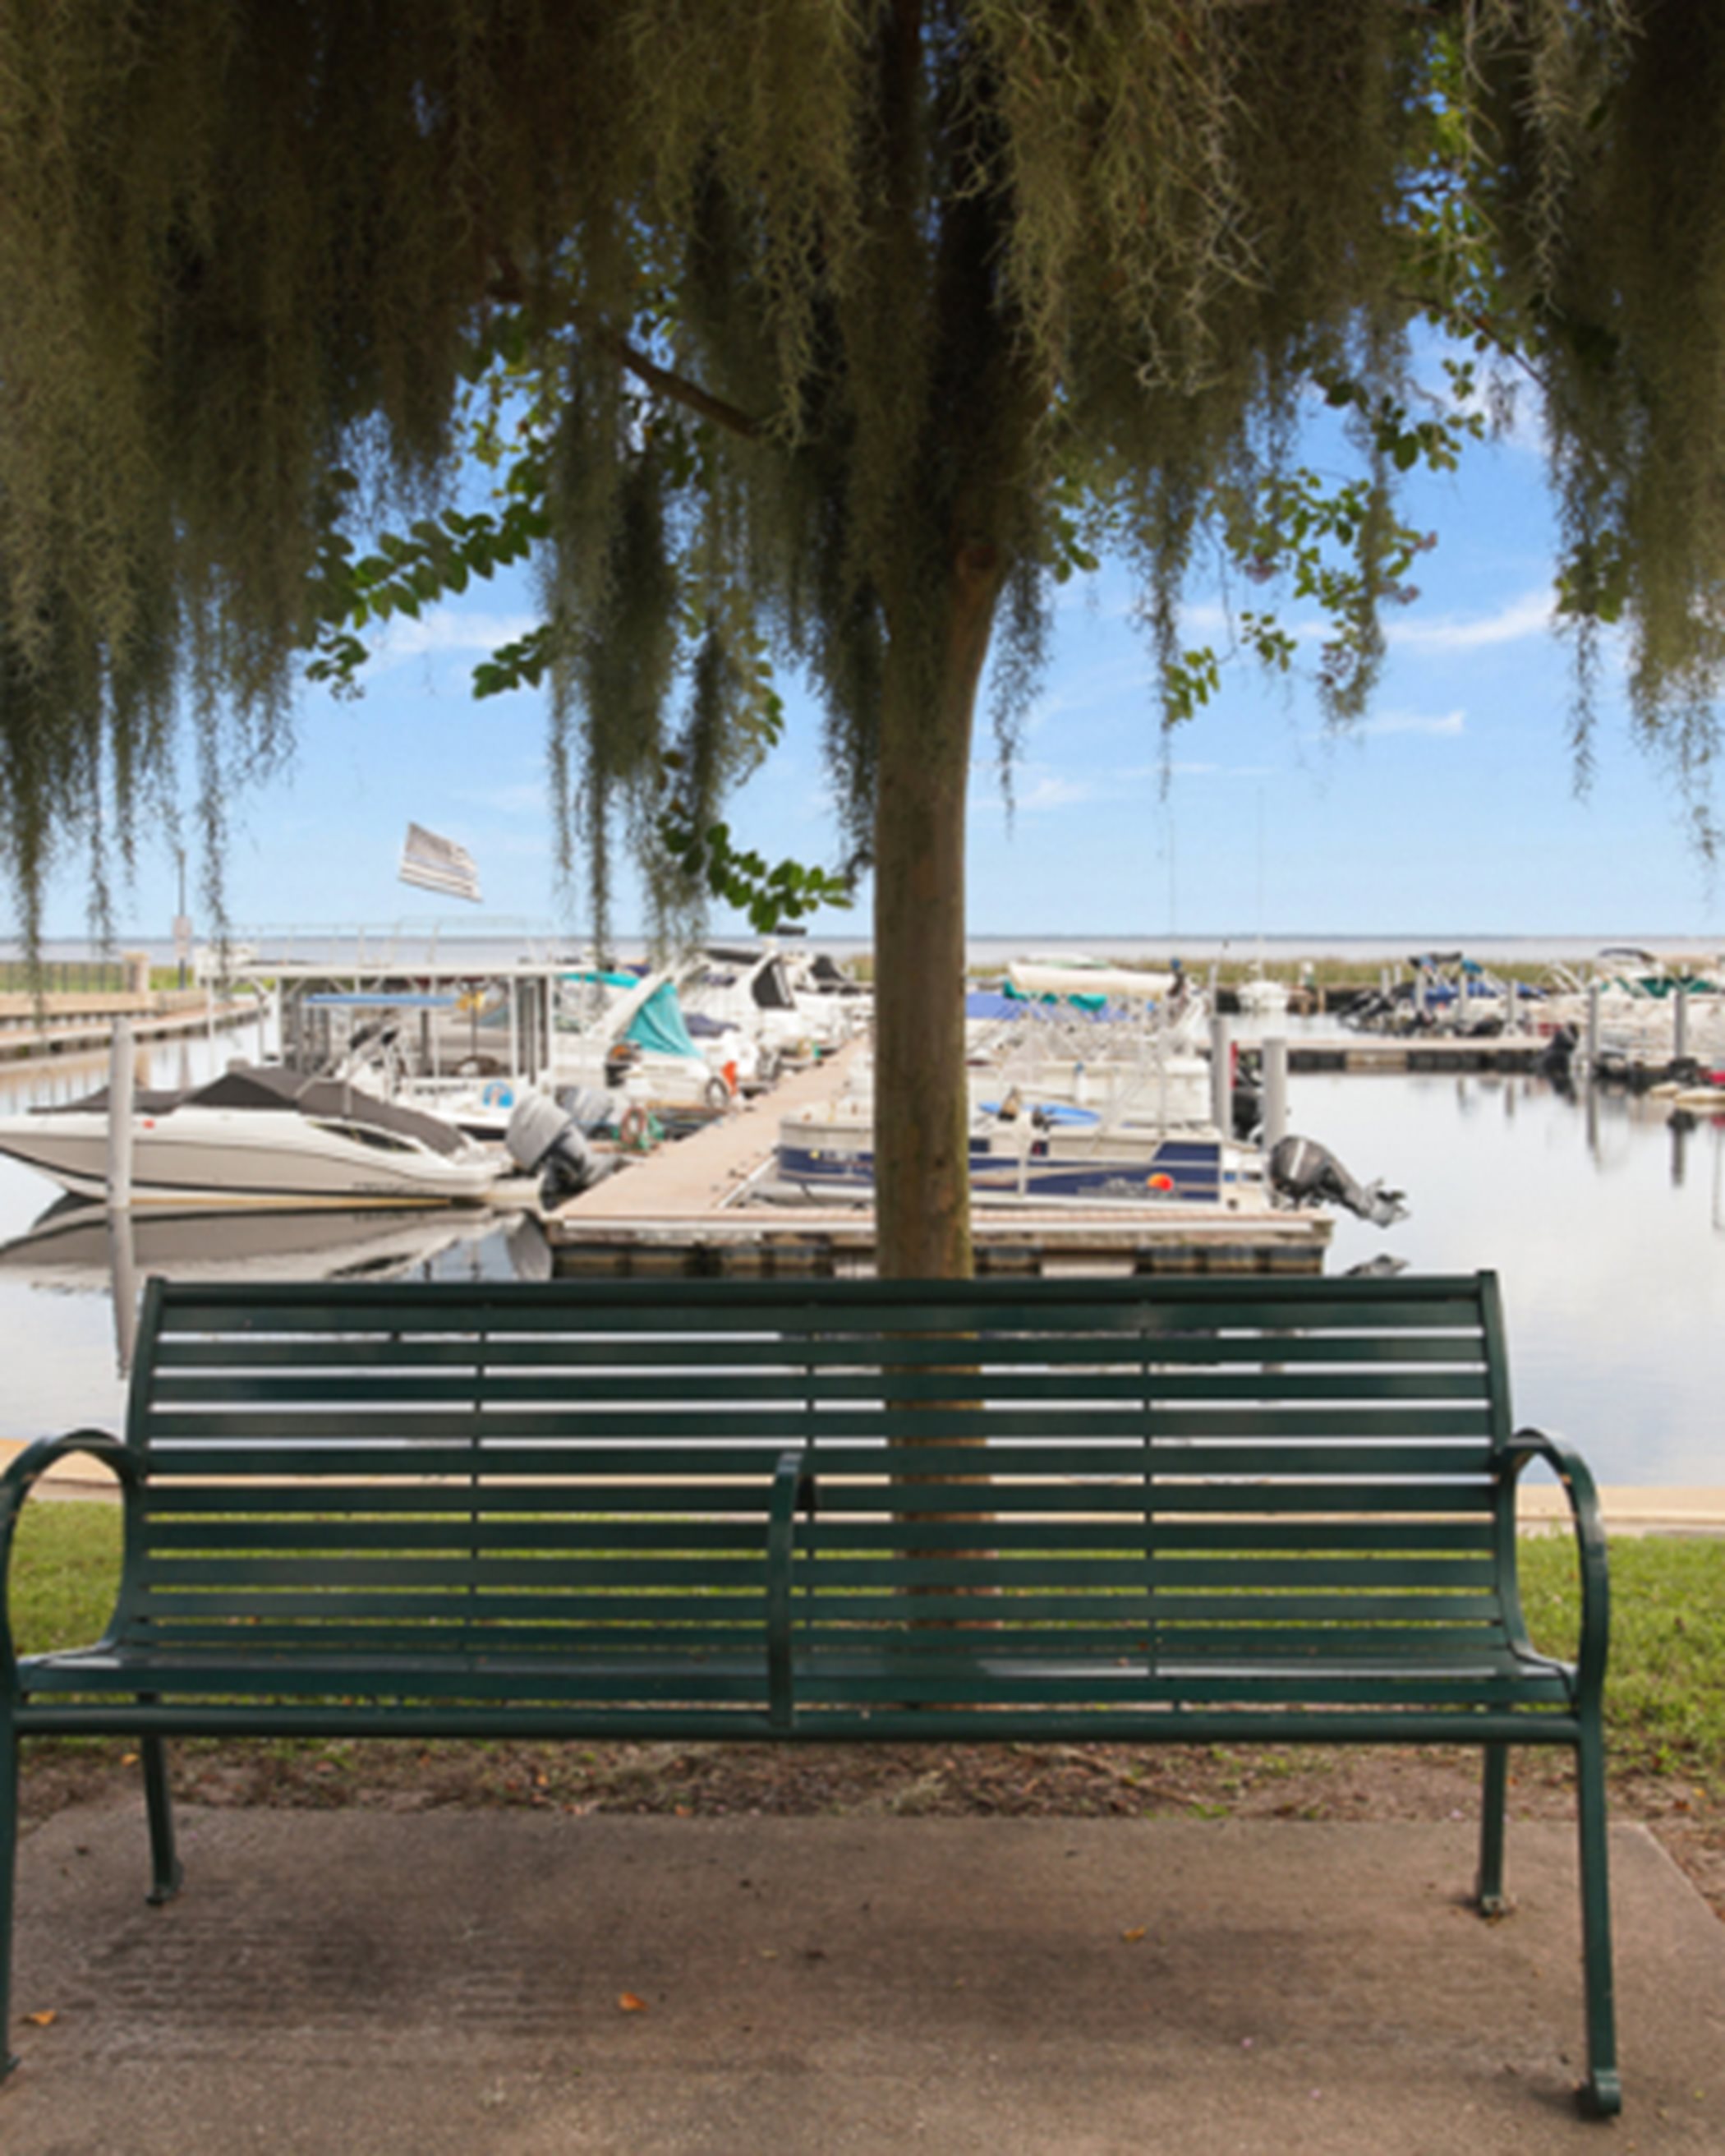 Local Marina and park bench